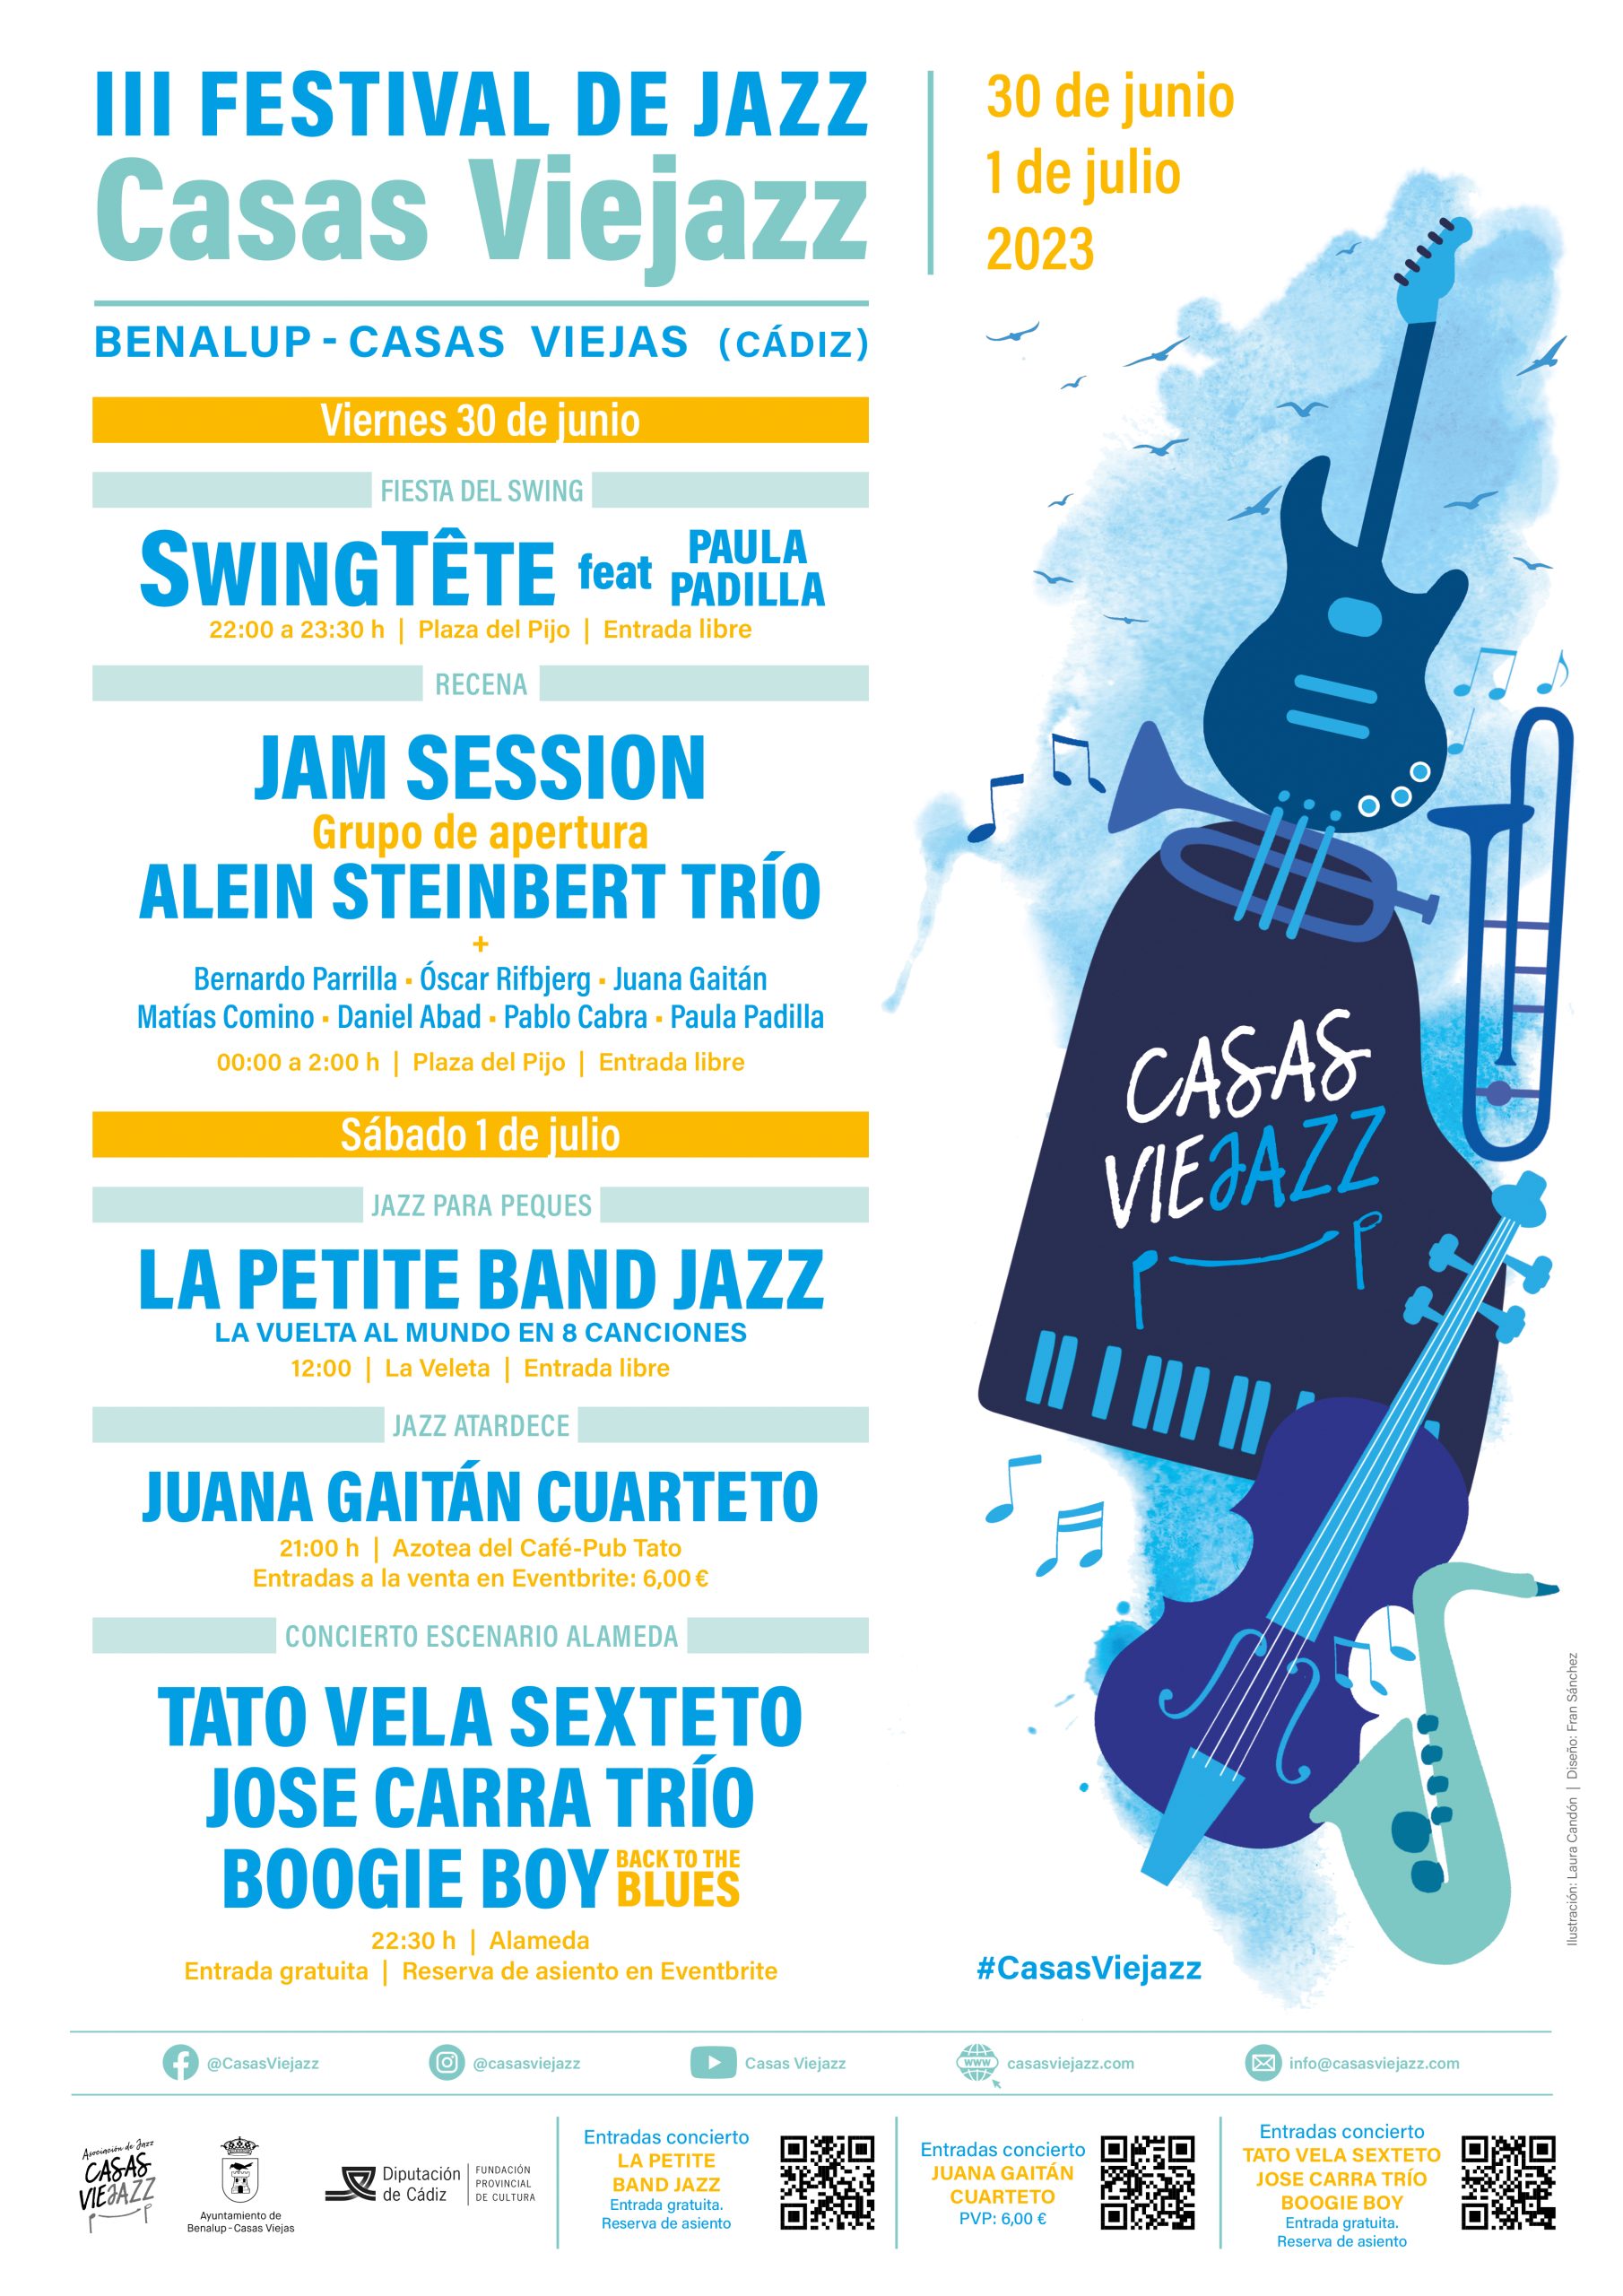 III Festival de Jazz Casas Viejazz 2023